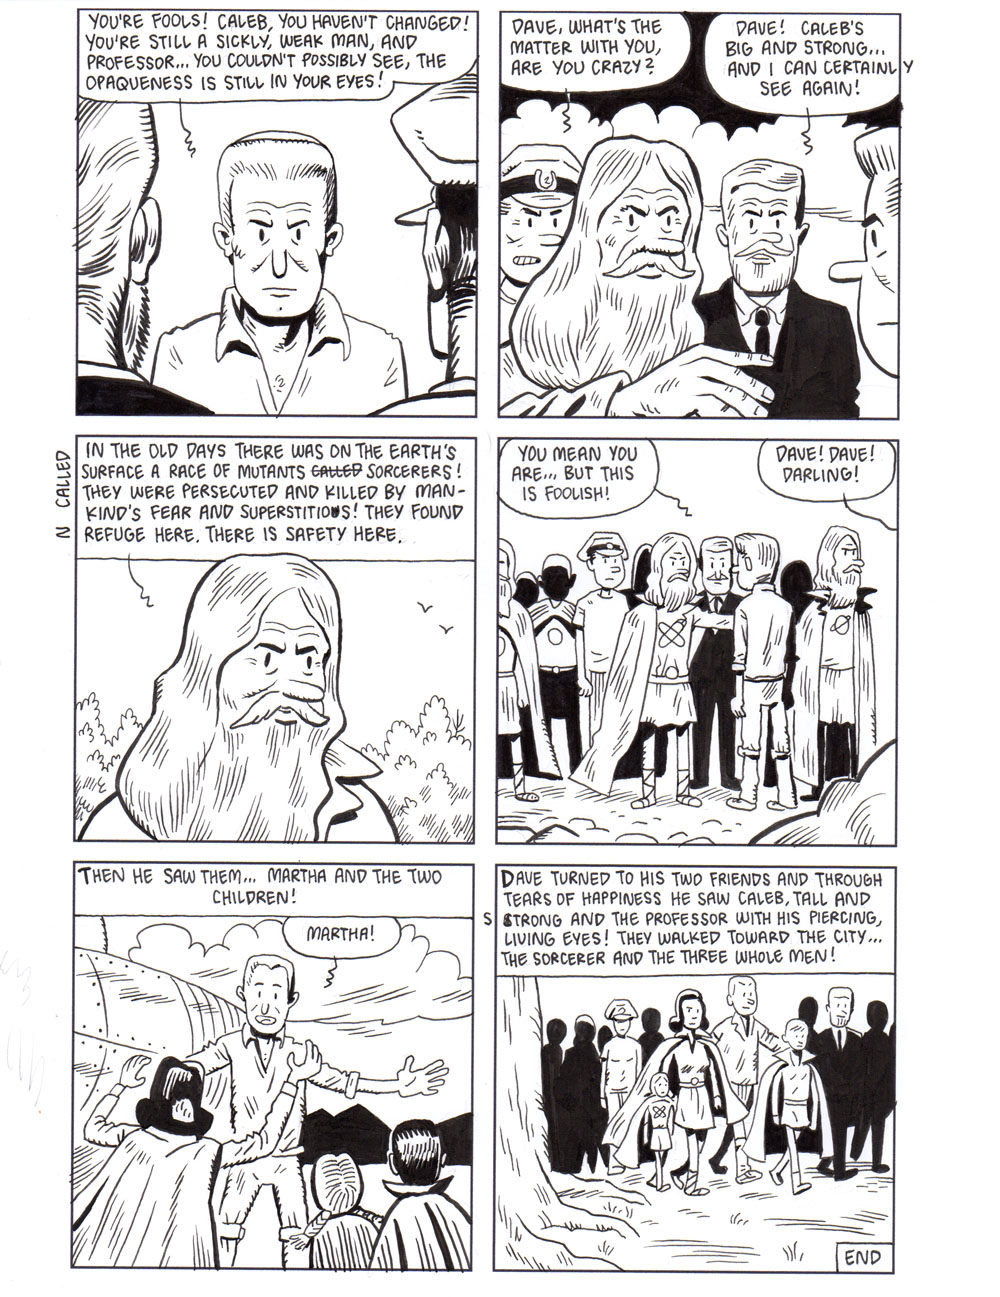 The Half Men page 7 of 7